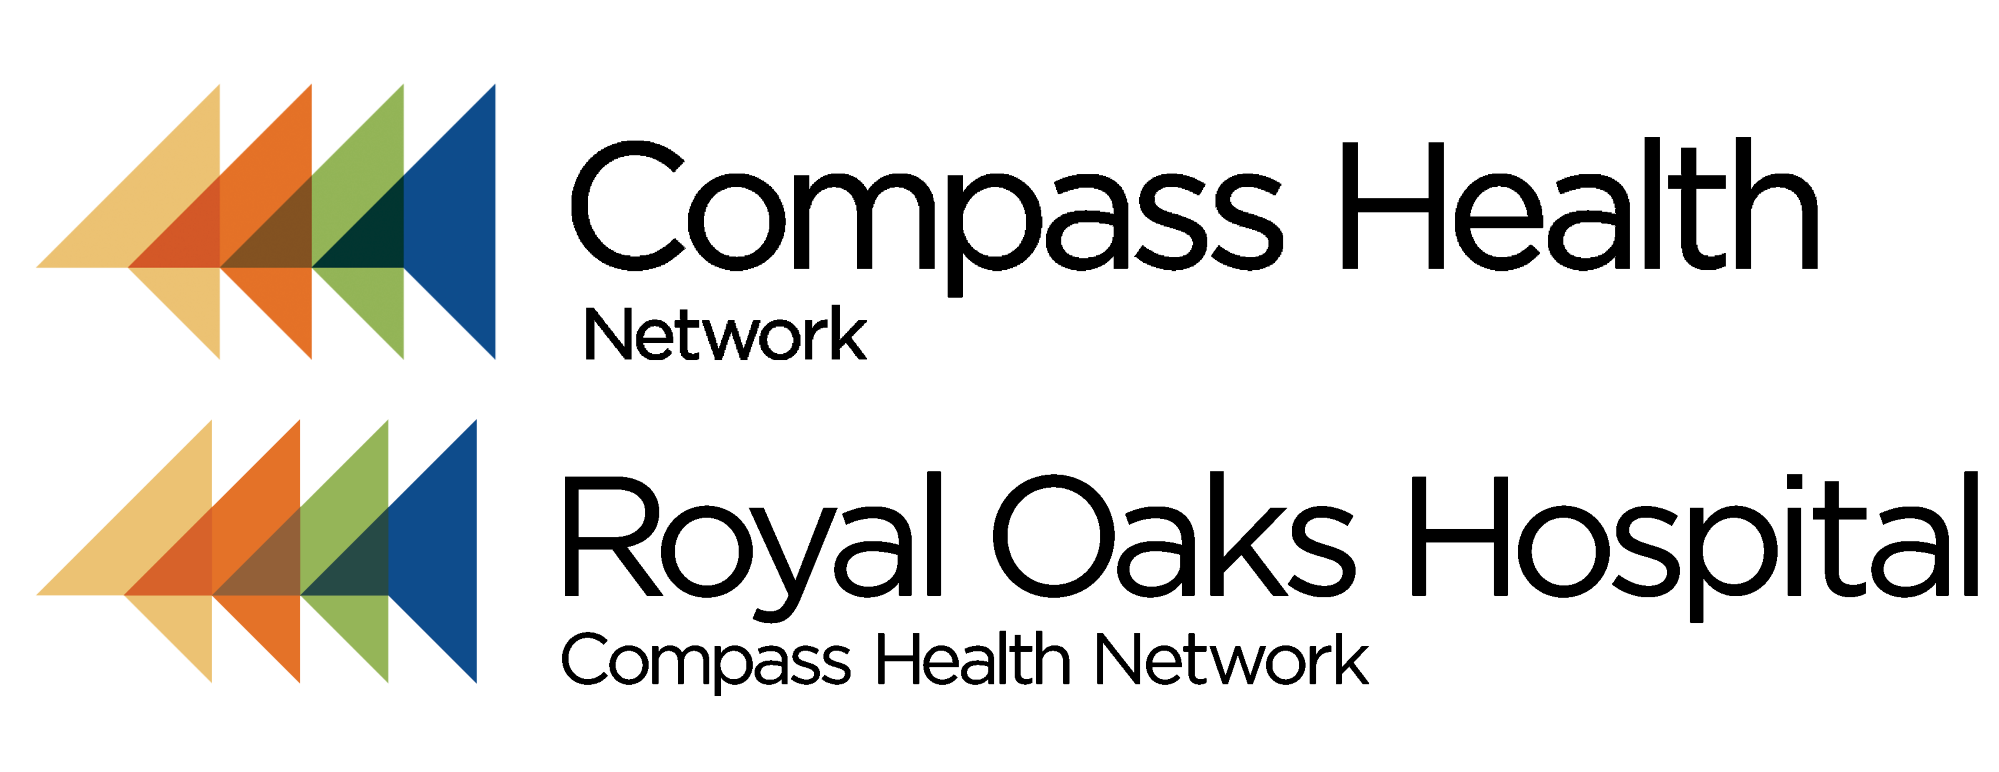 Compass Health Network/Royal Oaks Hospital